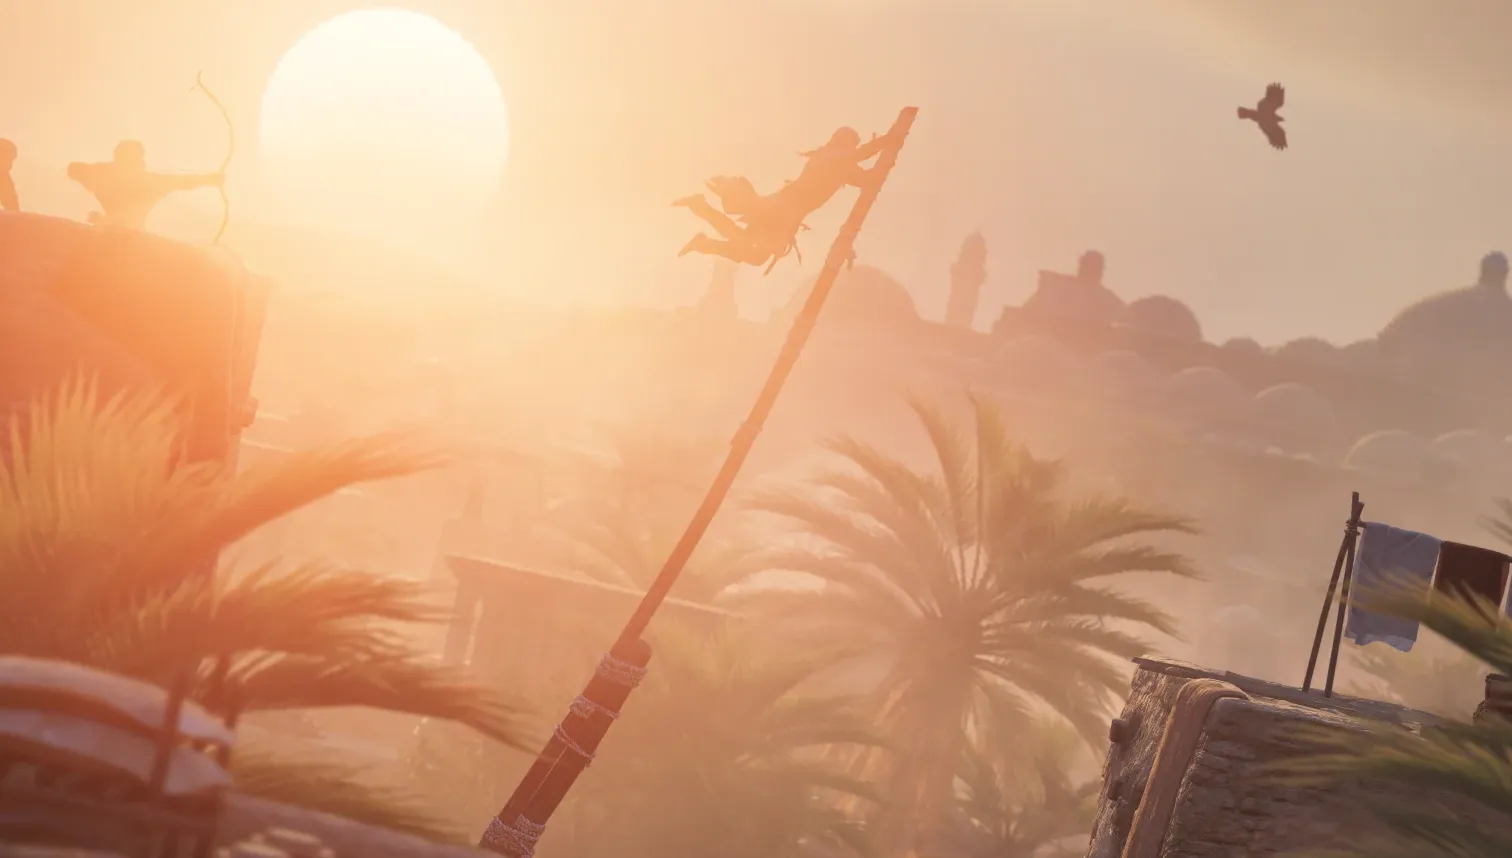 Assassin's Creed Mirage (Image credit: Ubisoft)